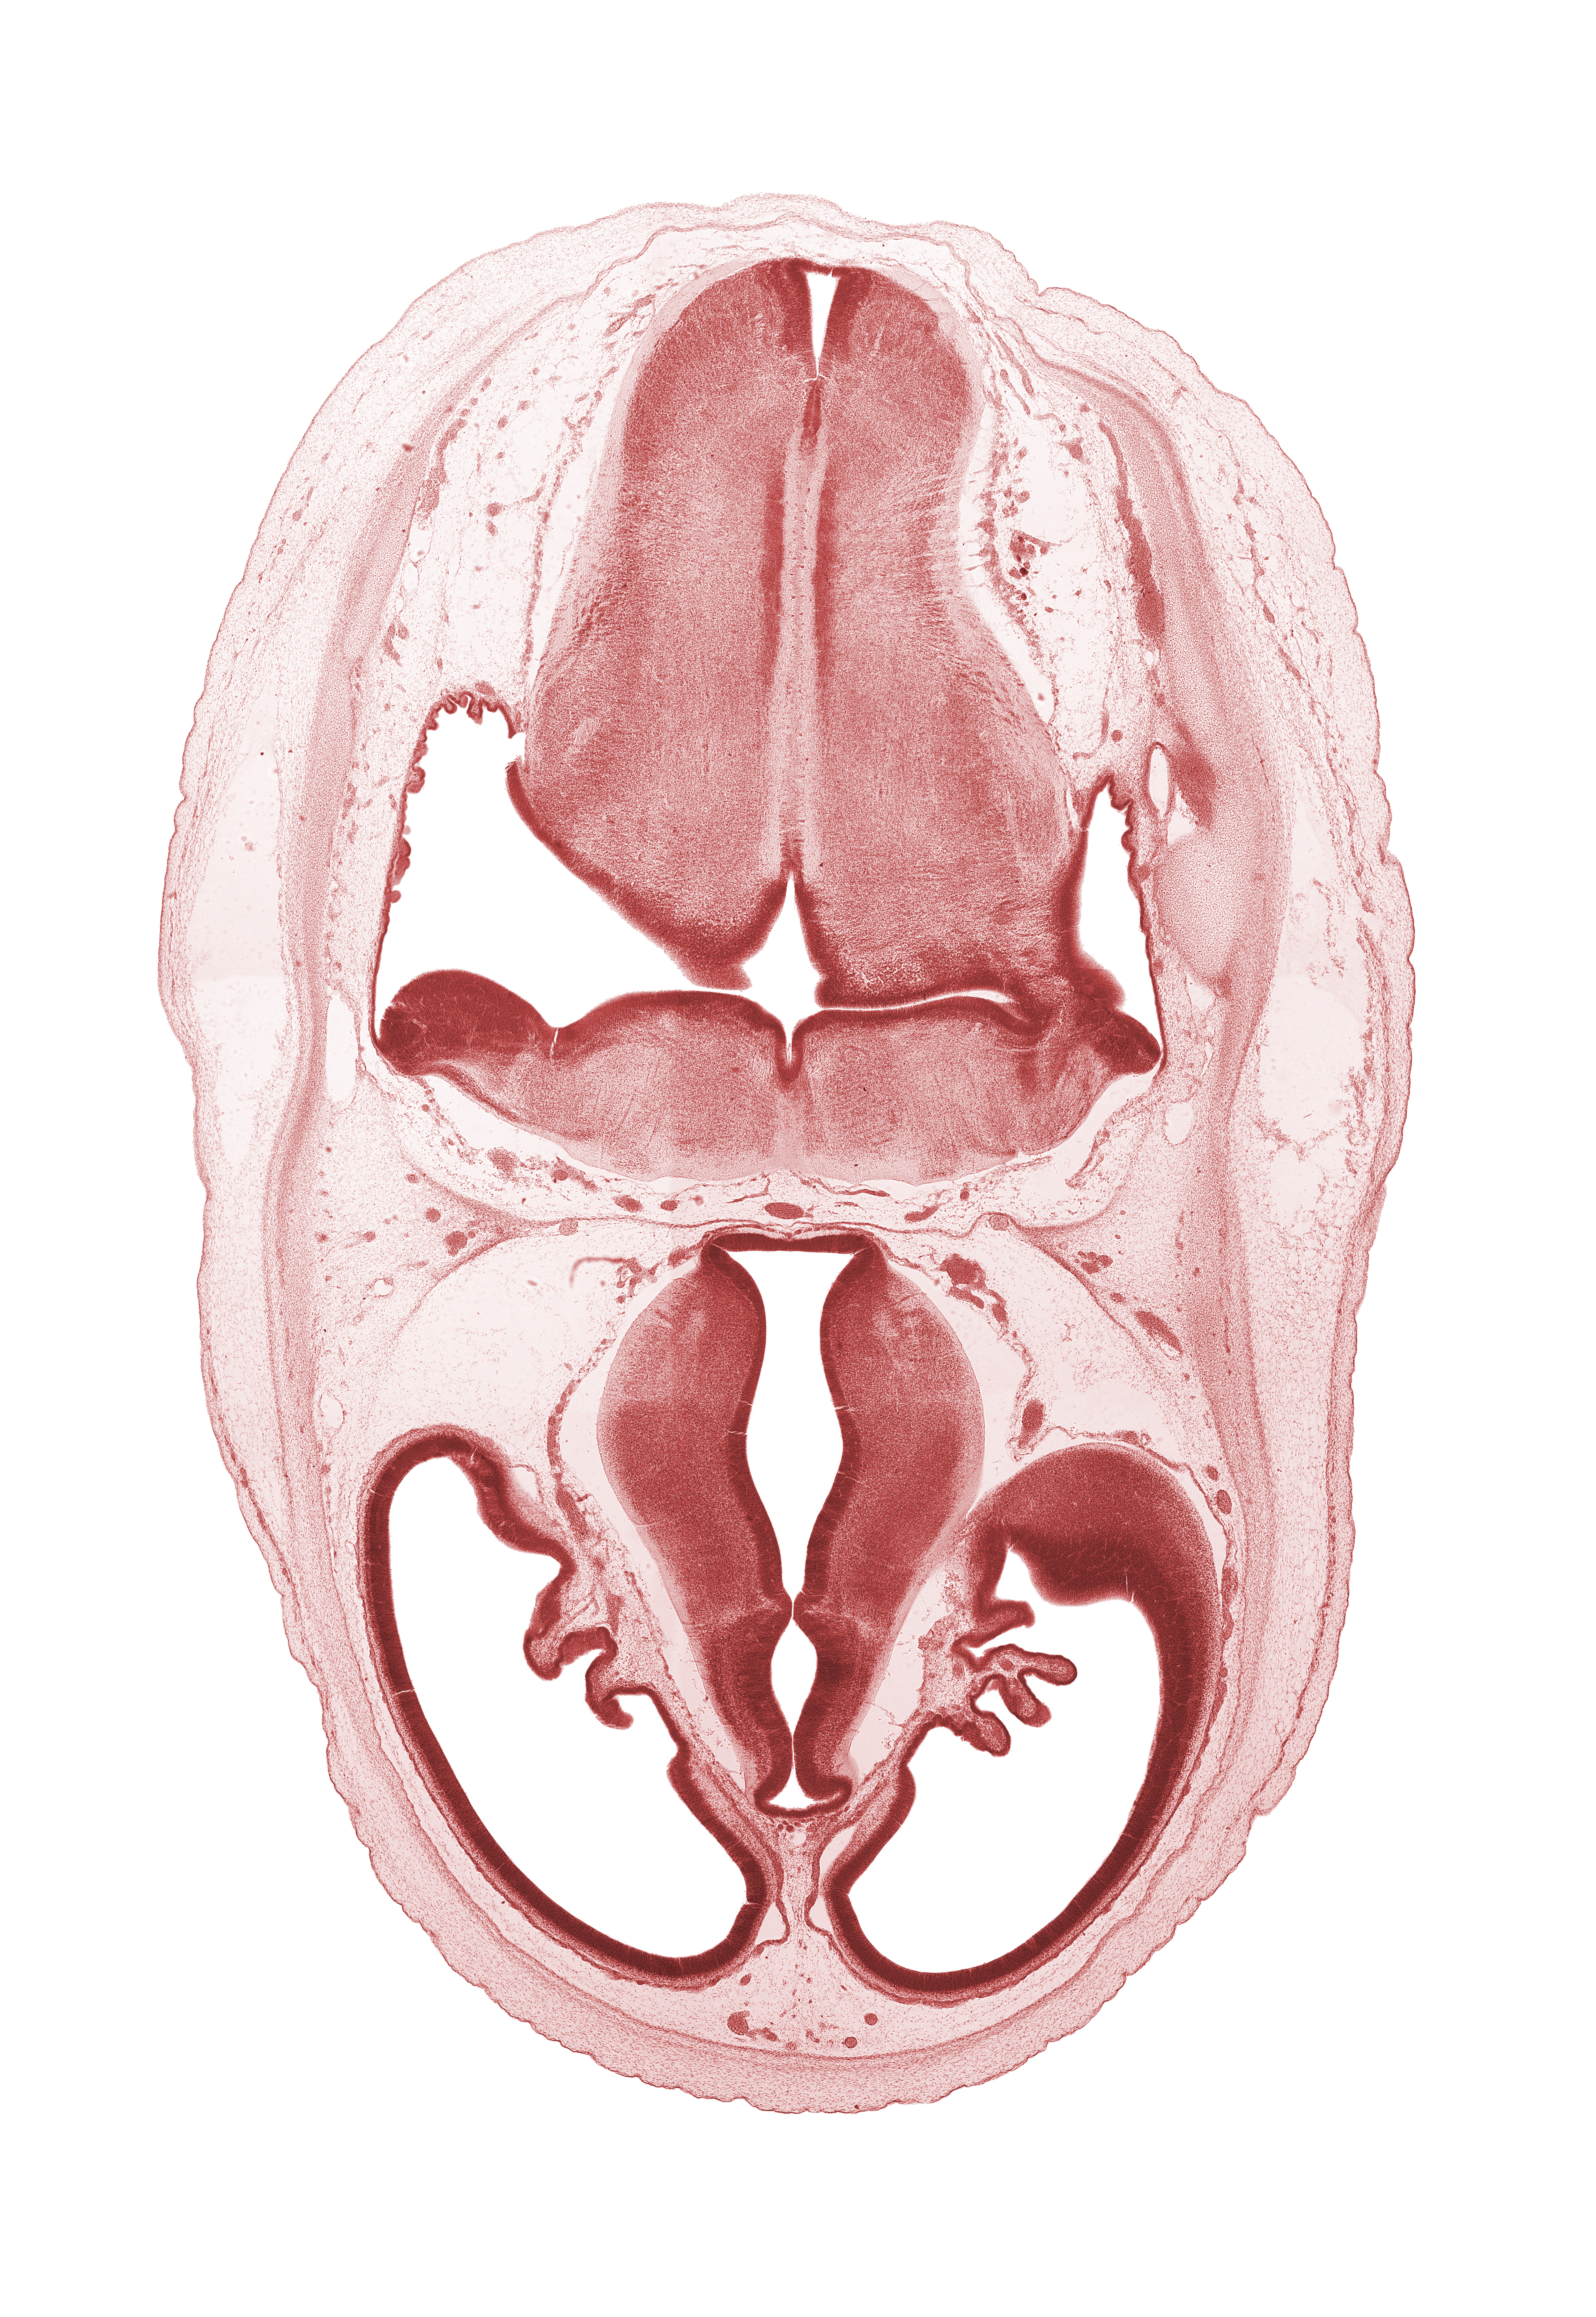 basilar artery, cerebral vesicle (telencephalon), diencephalon, dorsal thalamus, endolymphatic sac, lateral ventricle, marginal ridge, metencephalon (pons), myelencephalon (medulla oblongata), obex, posterior communicating artery, posterior dural venous plexus, rhombencoel (fourth ventricle), sulcus dorsalis, third ventricle, ventral thalamus, zona limitans intrathalamica